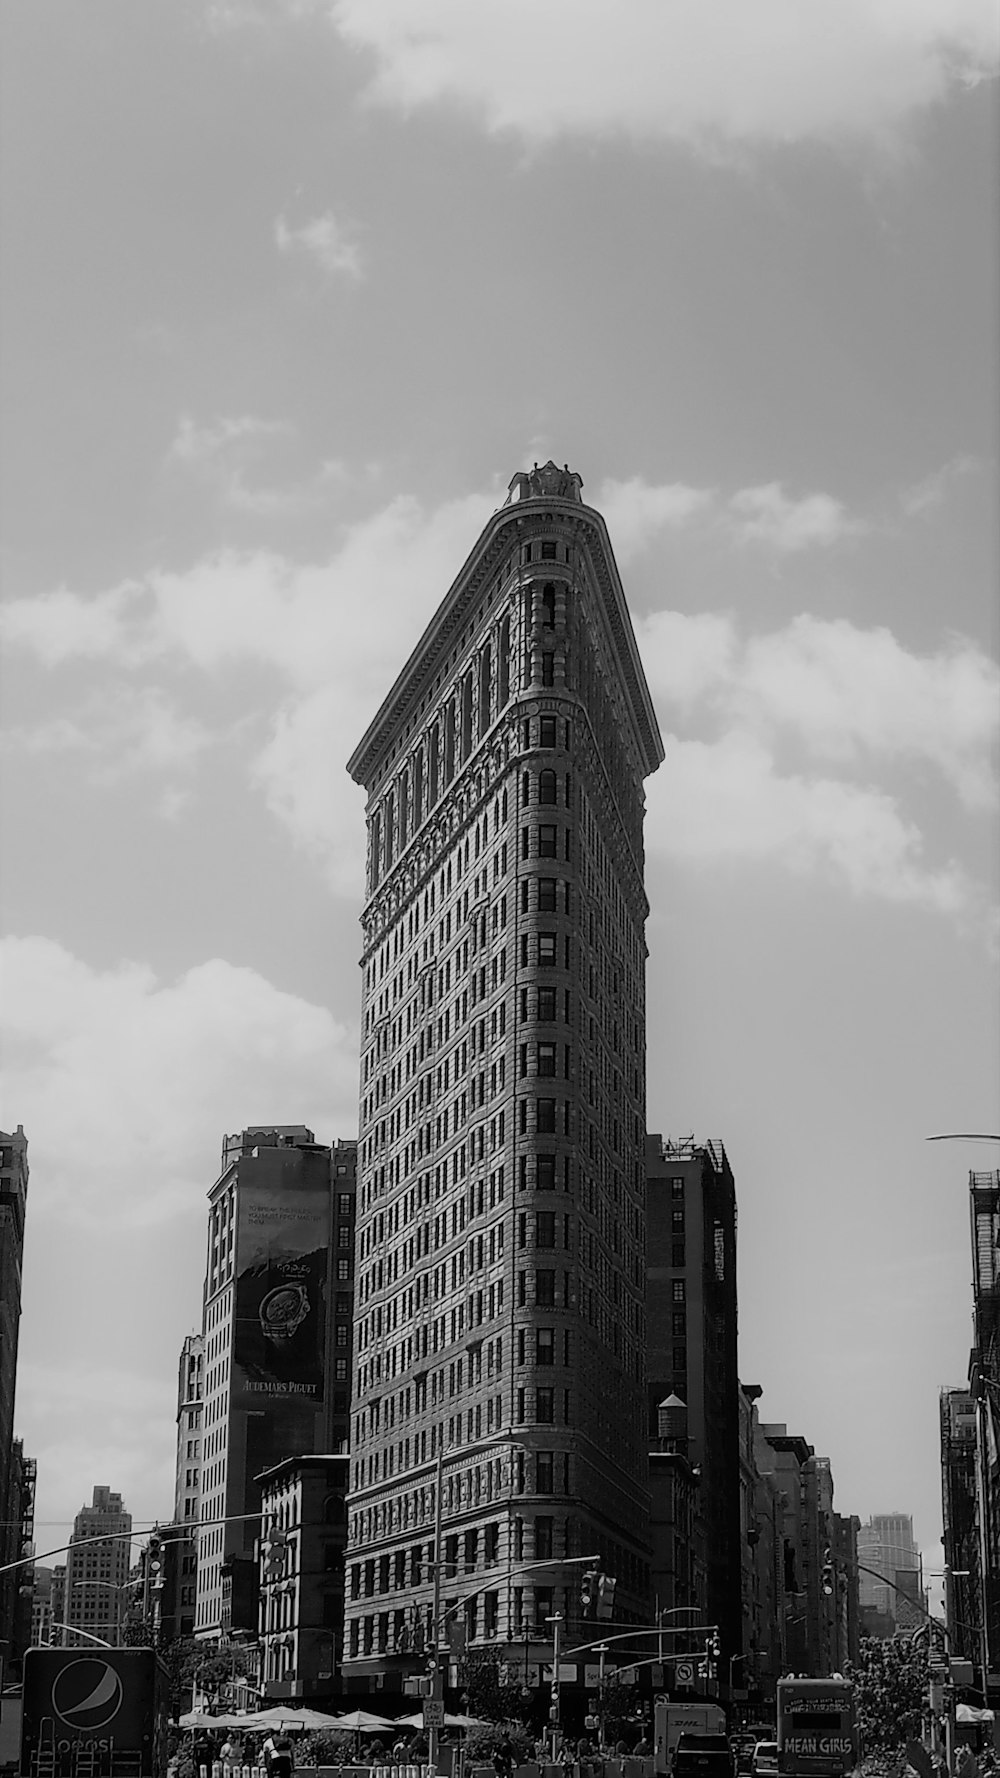 Fotografía en escala de grises de edificios